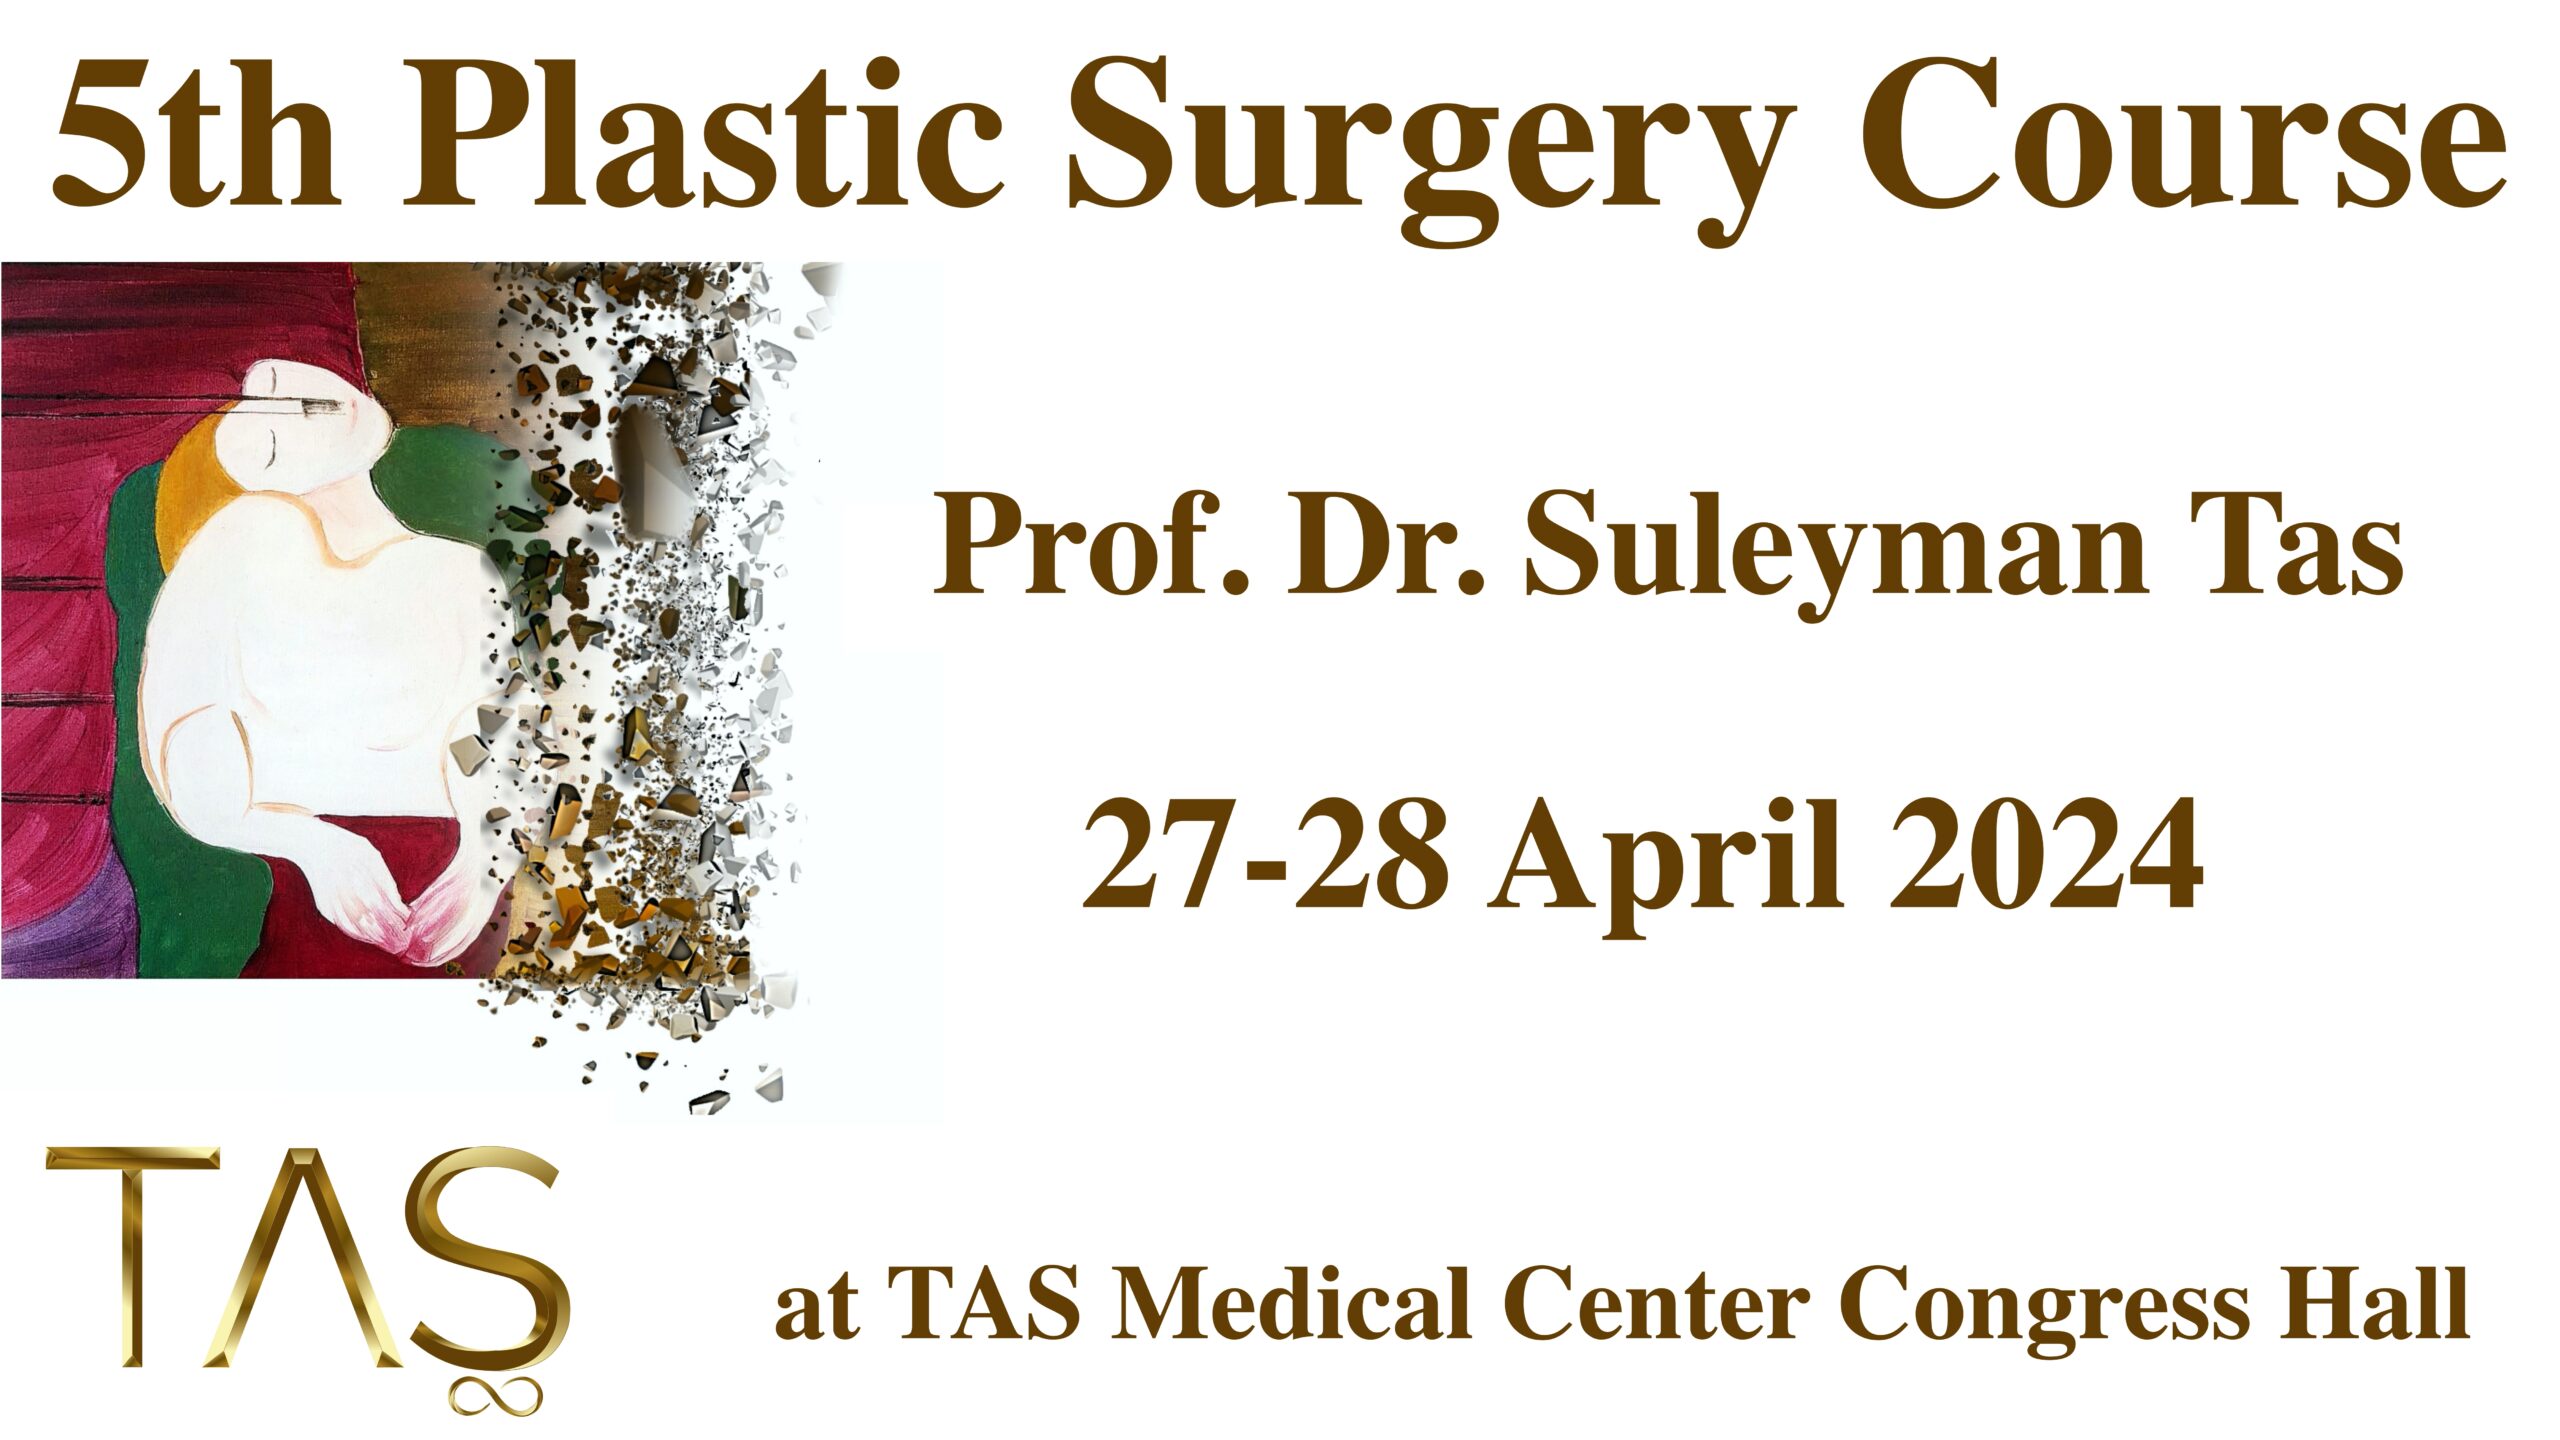 Plastic surgery course - become a masterclass surgeon